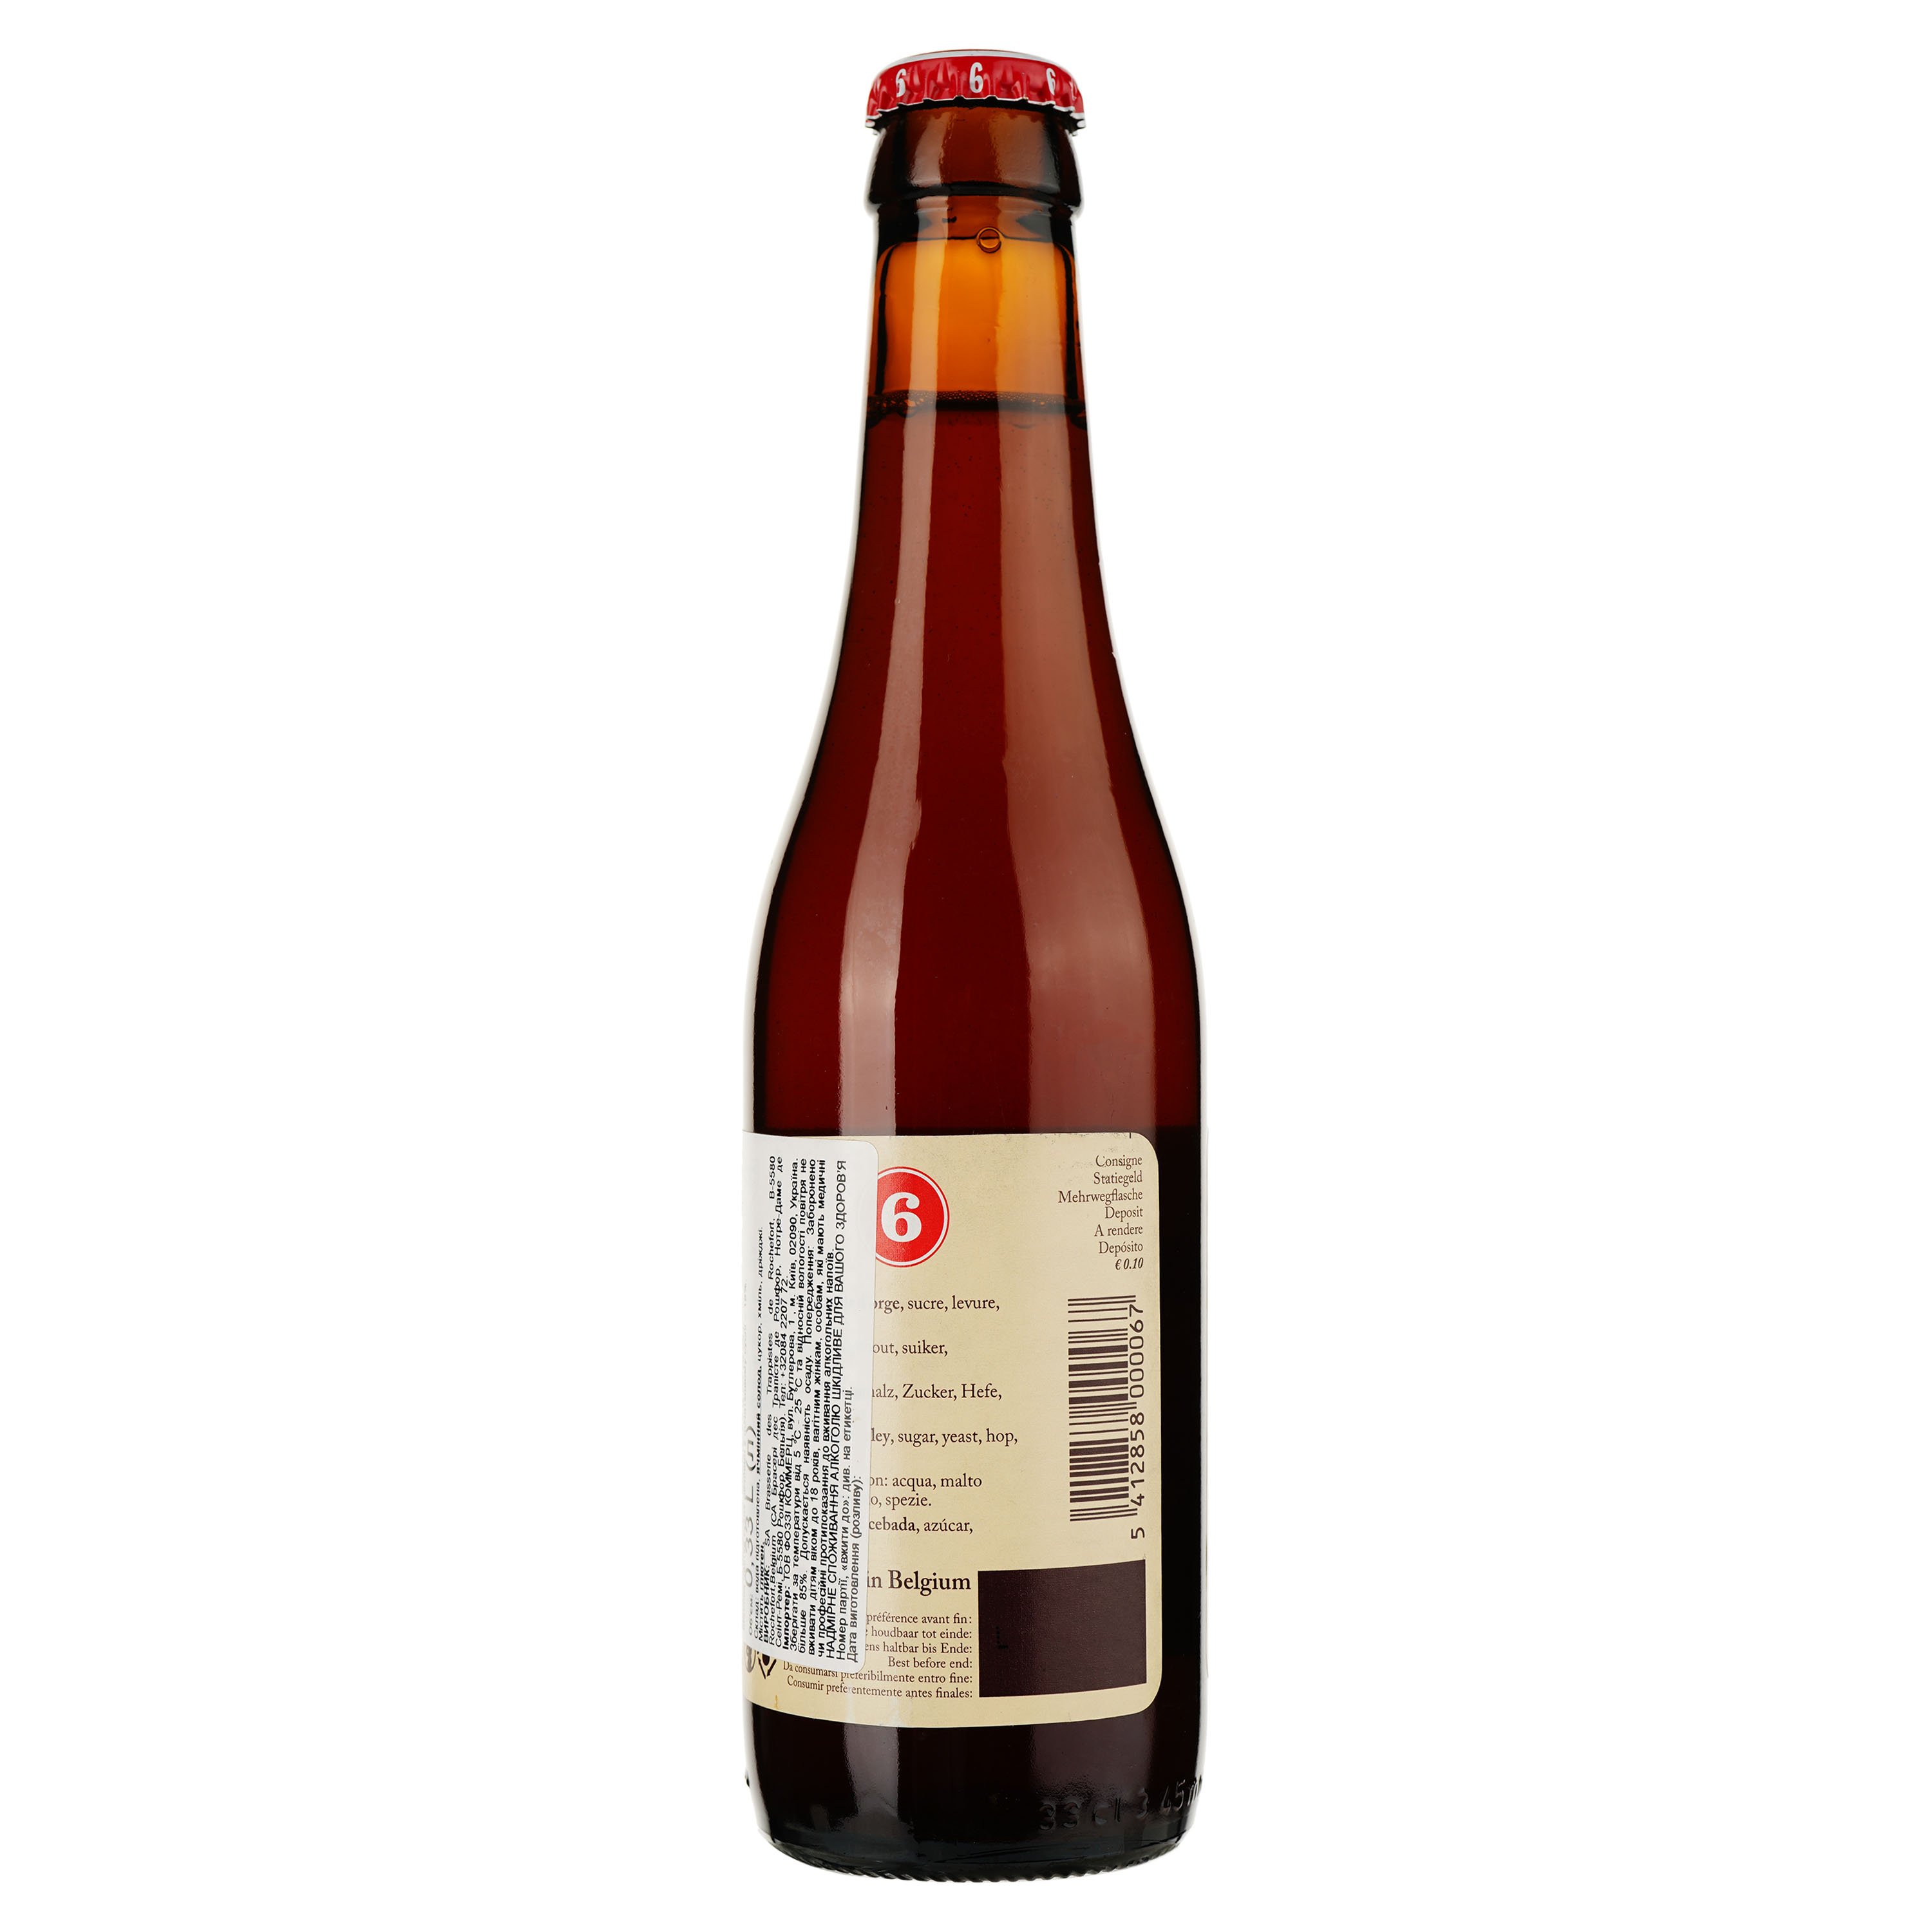 Пиво Trappistes Rochefort 6 темне солодове нефільтроване, 7,5%, 0,33 л (545762) - фото 2